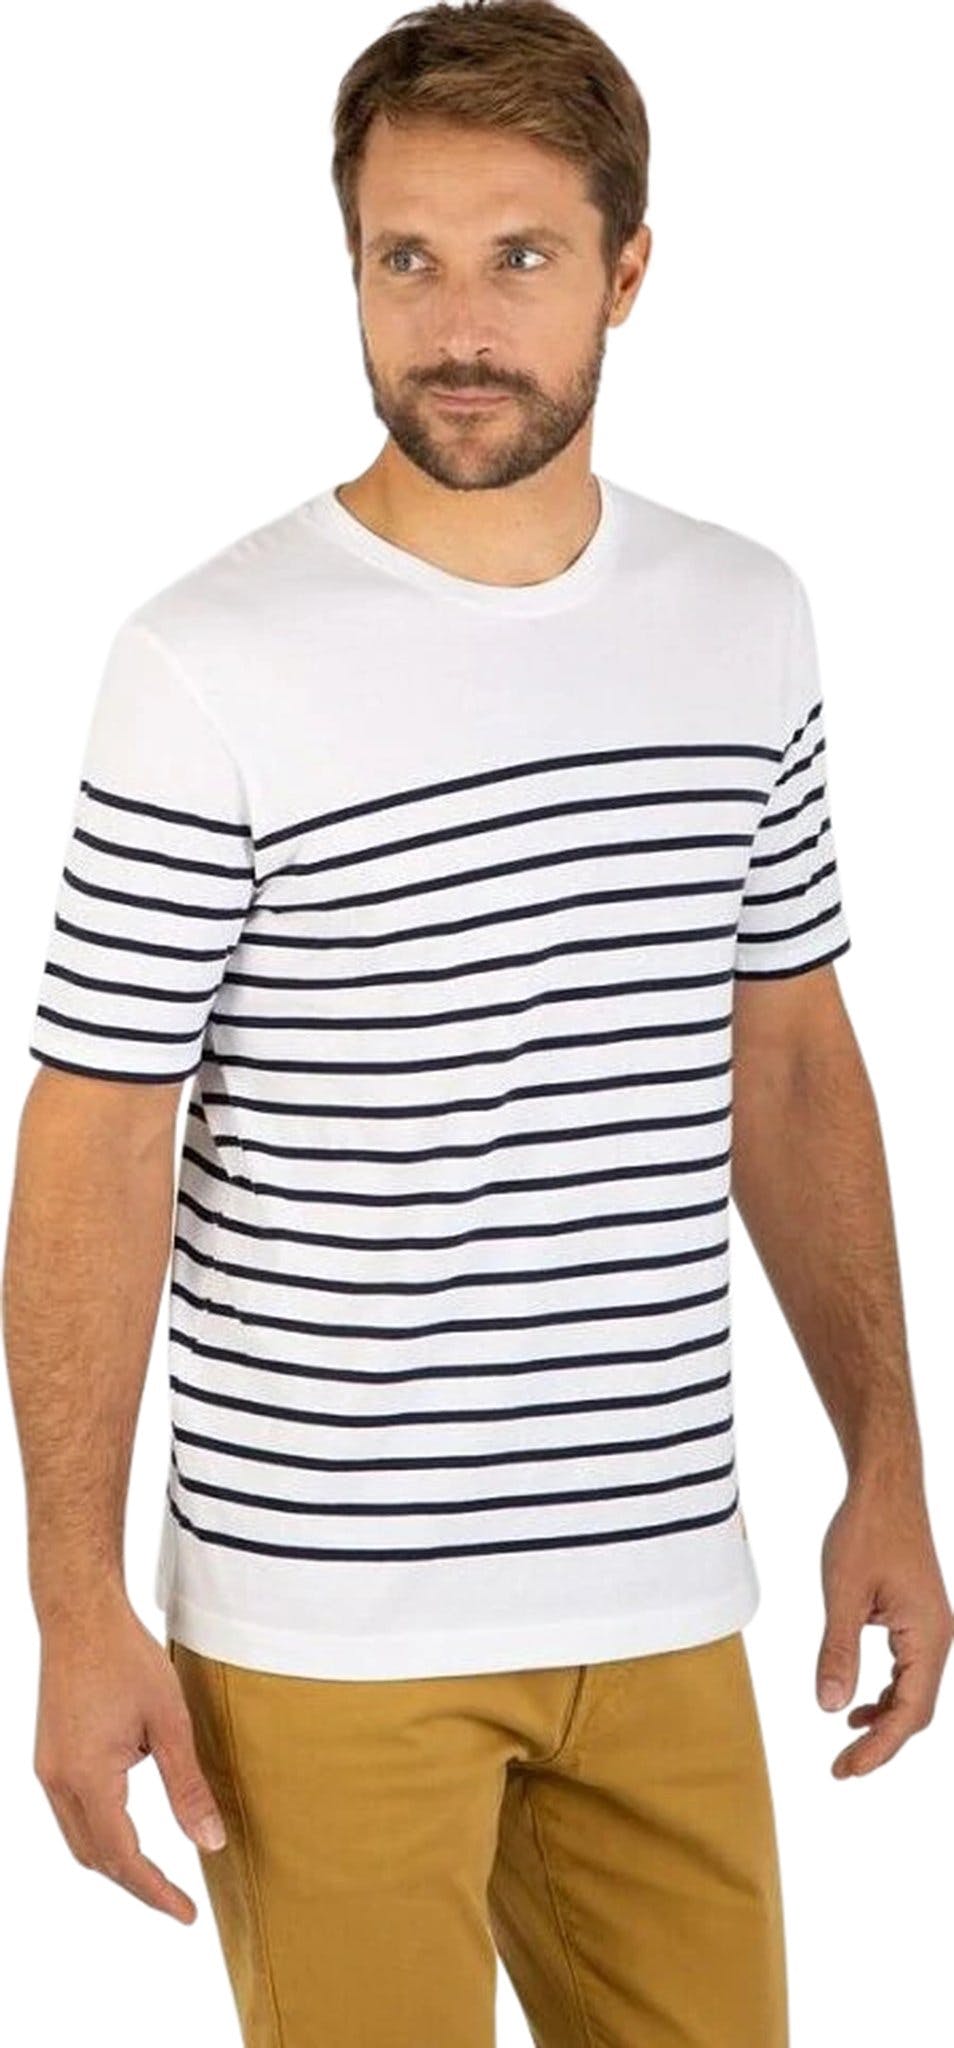 Product image for Etel Breton Striped Cotton Jersey - Men's